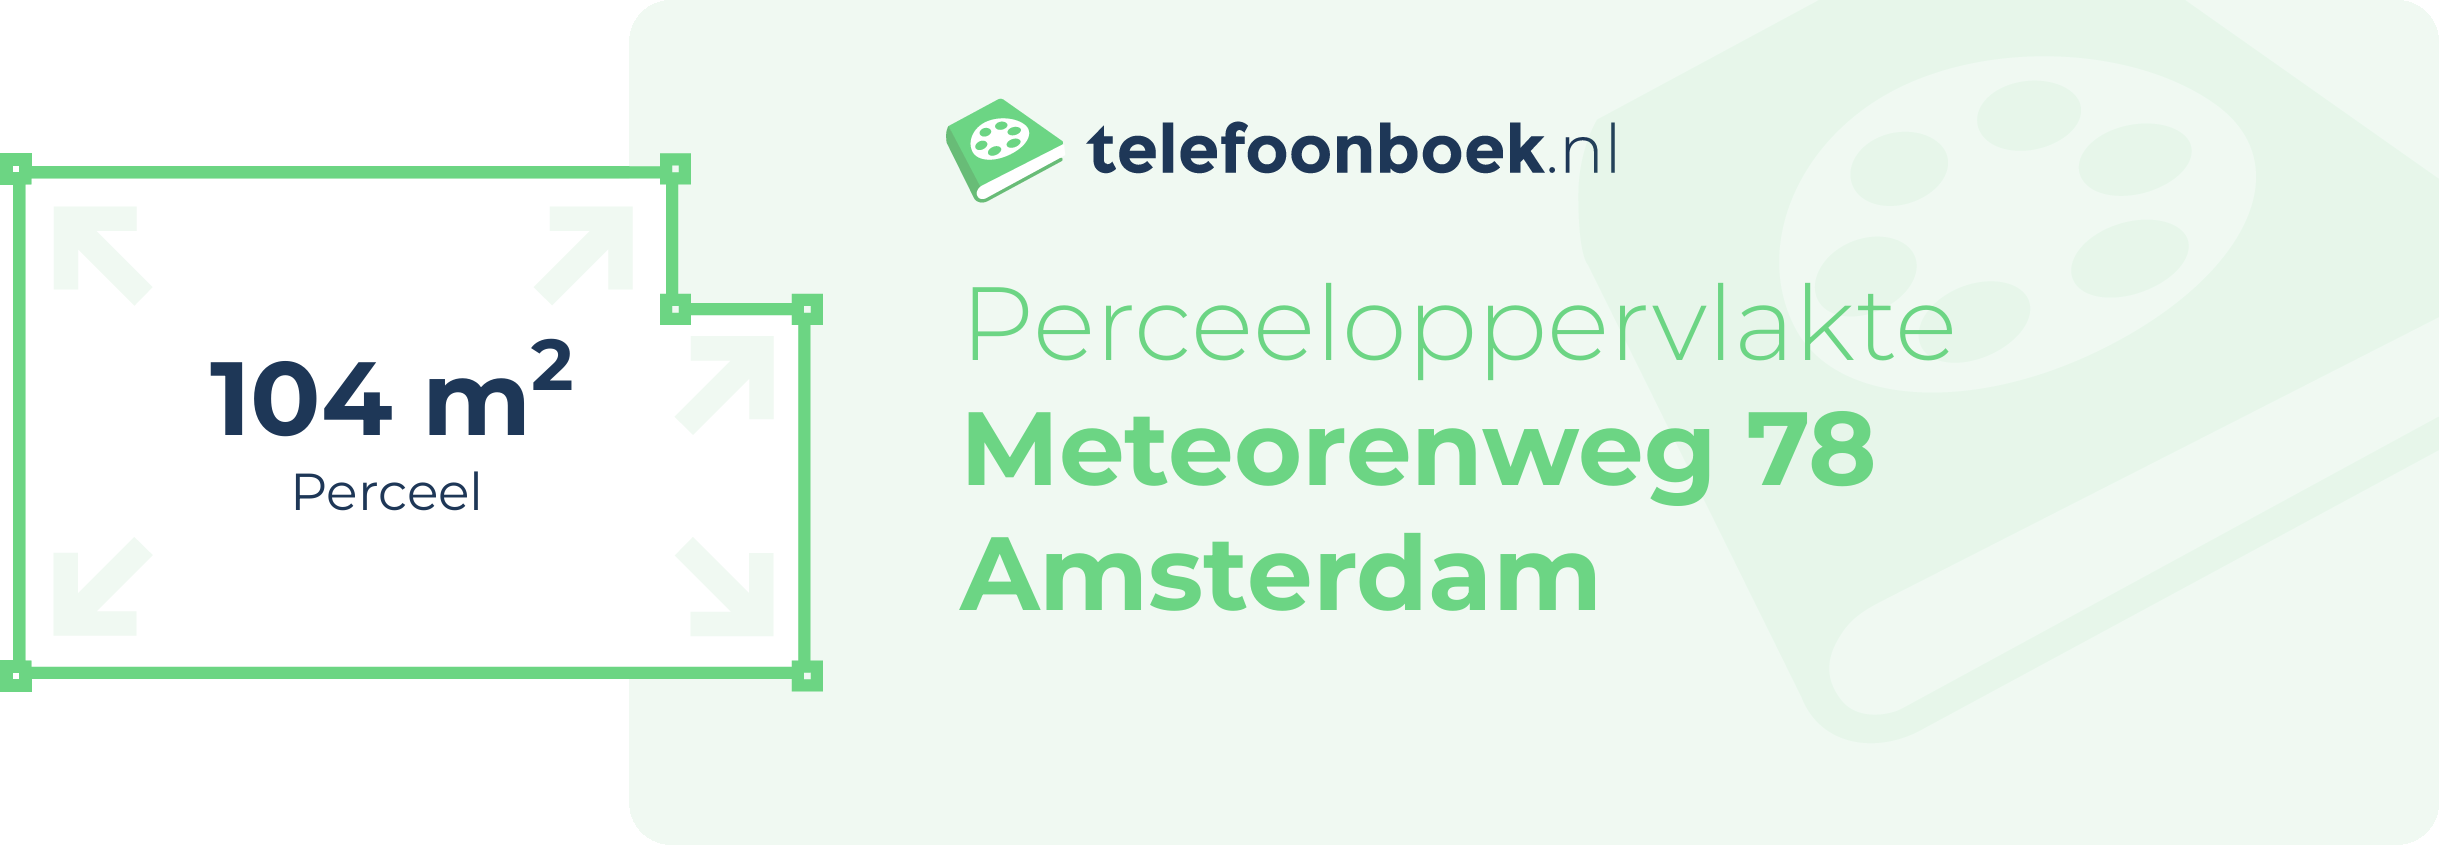 Perceeloppervlakte Meteorenweg 78 Amsterdam